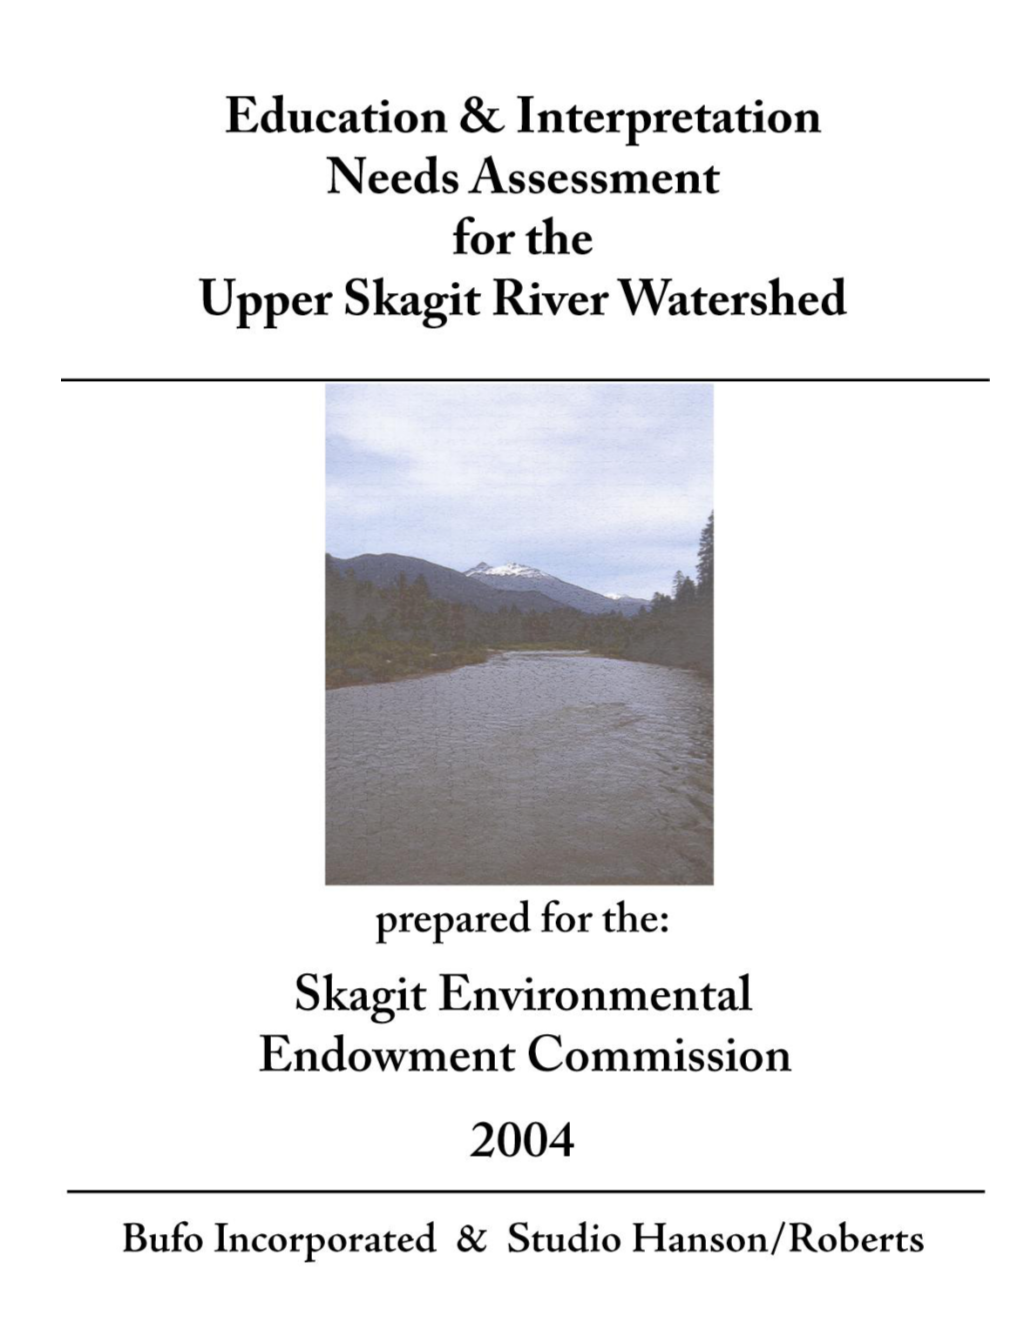 Education and Interpretation for the Skagit Environmental Endowment Commission Above Ross Dam